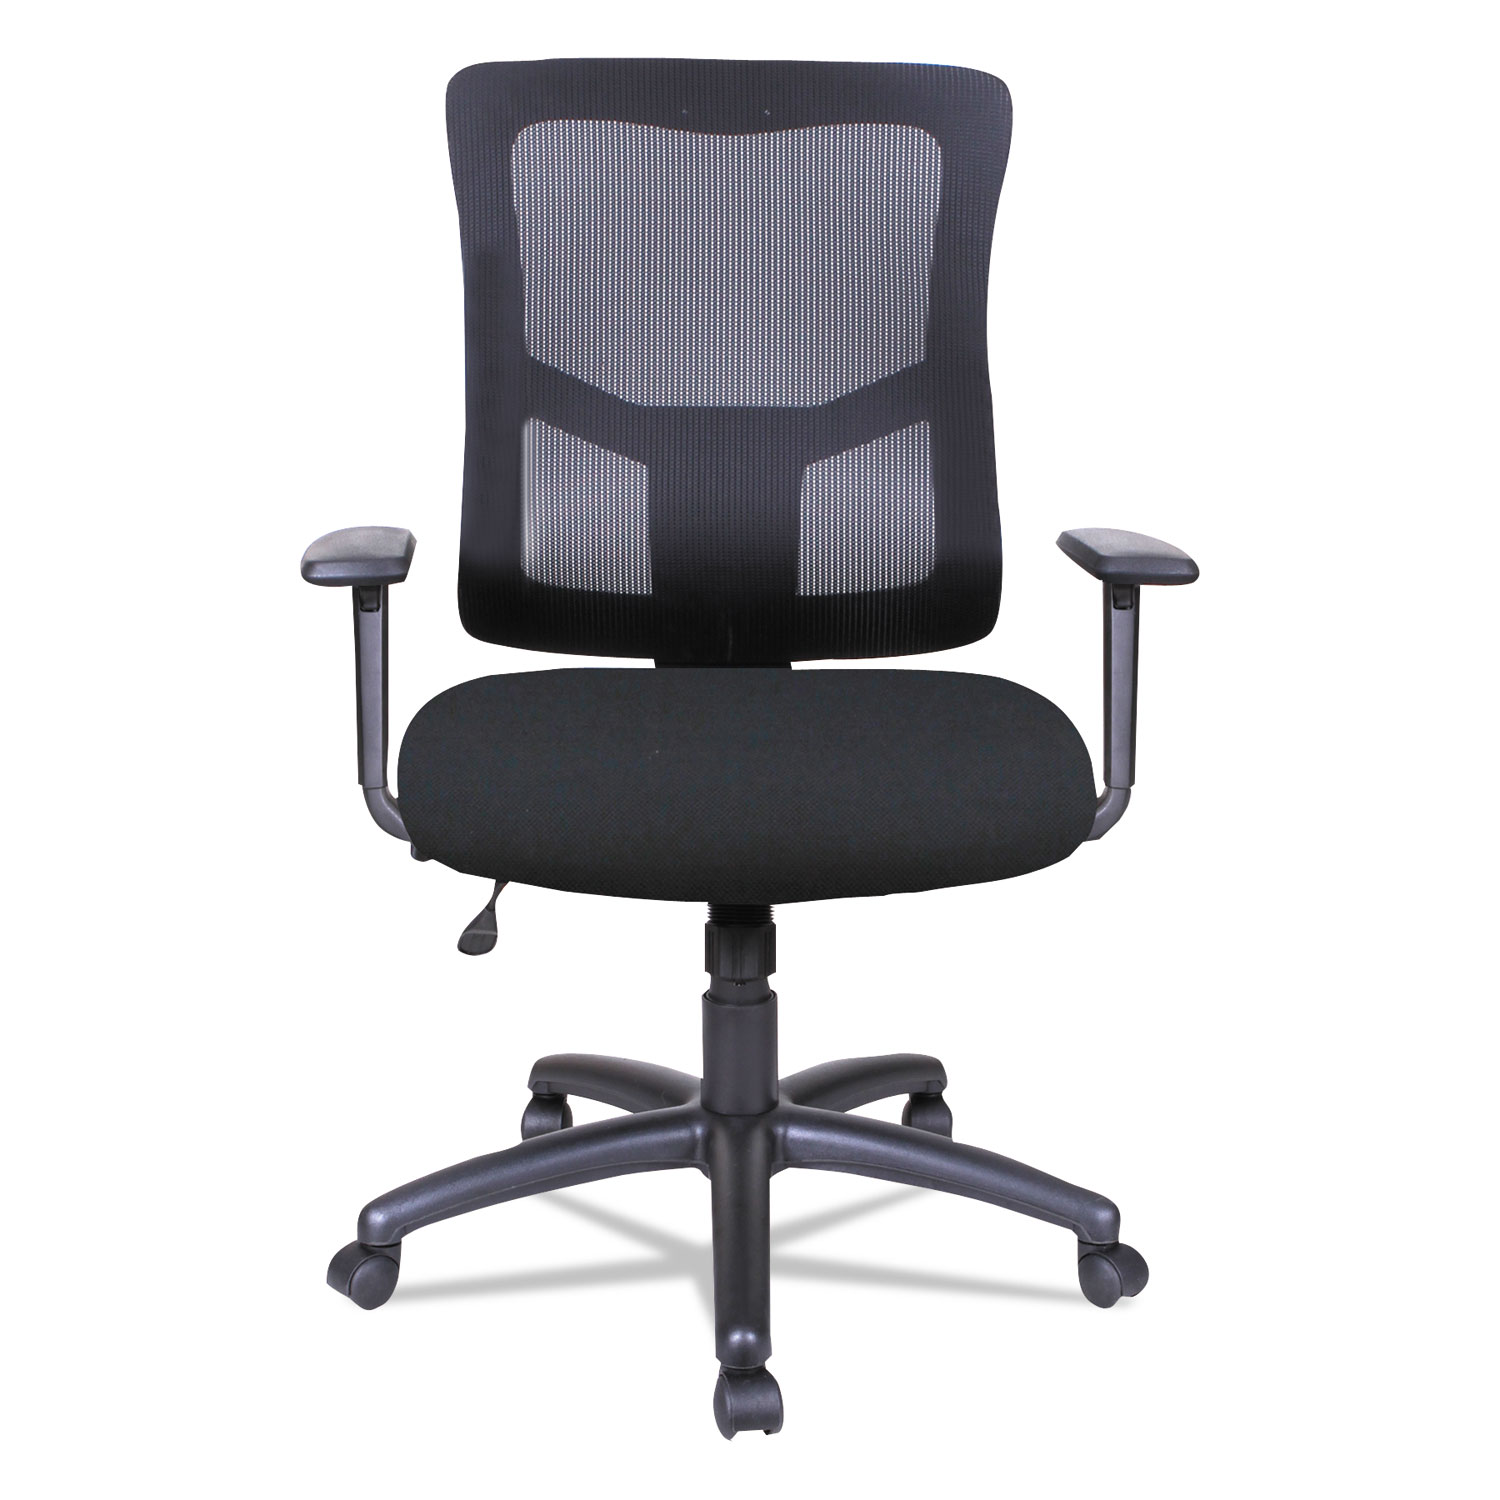 Elusion II Series Mesh Mid-Back Swivel/Tilt Chair with Adjustable Arms, Black